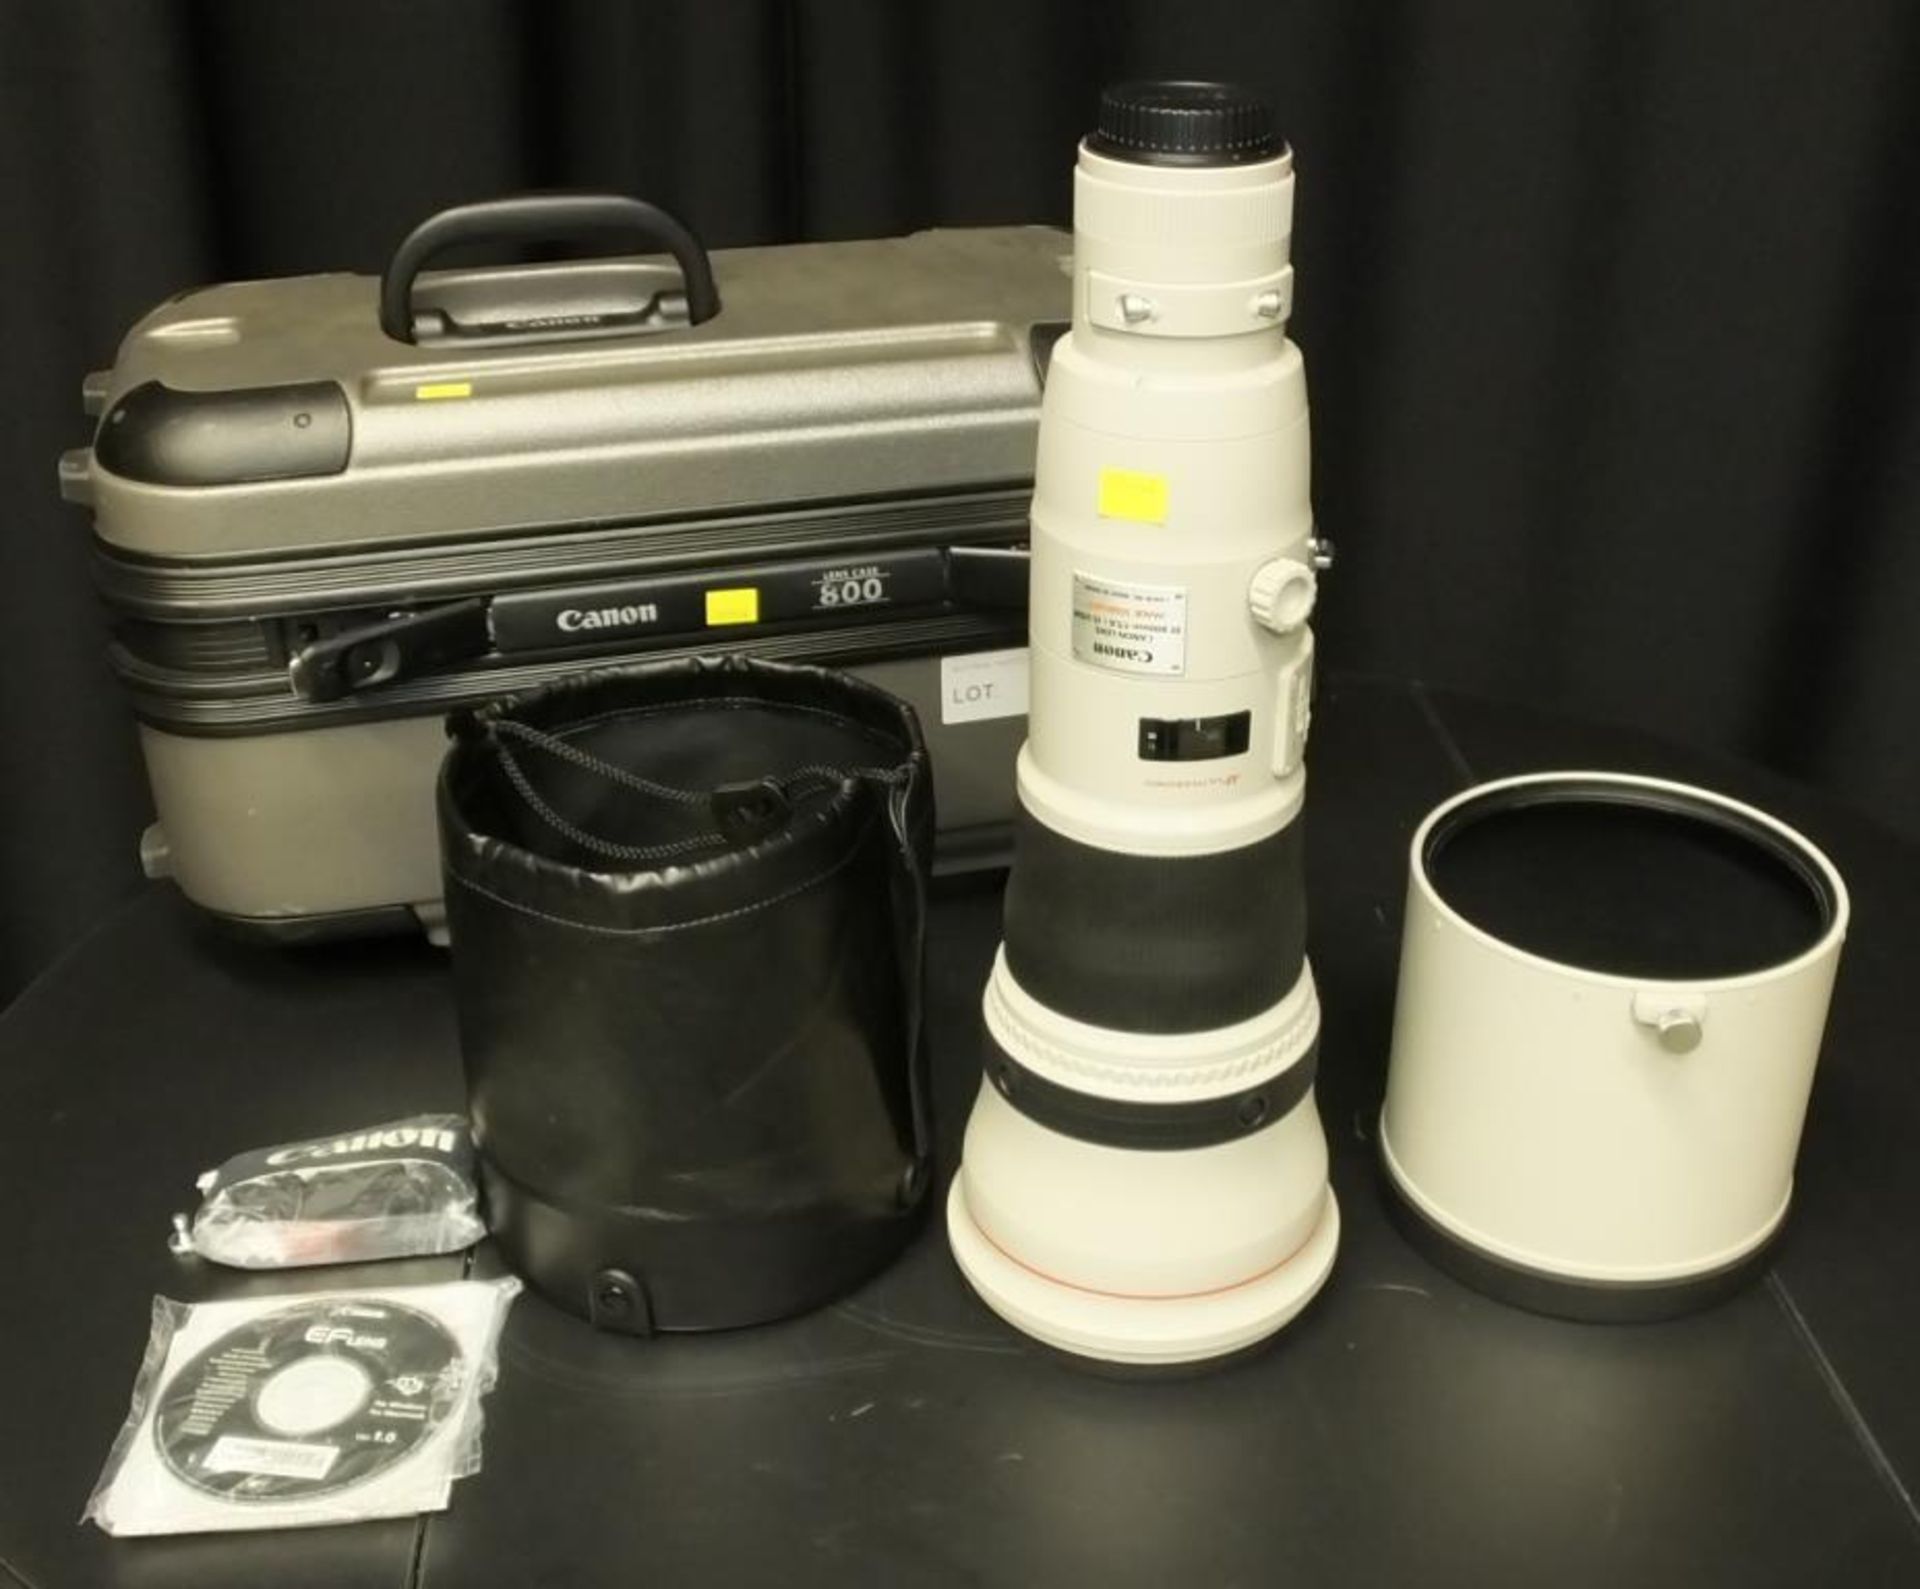 Canon lens EF 800mm - 1:5.6 L IS USM - Image stabilizer - ultrasonic - serial 18325